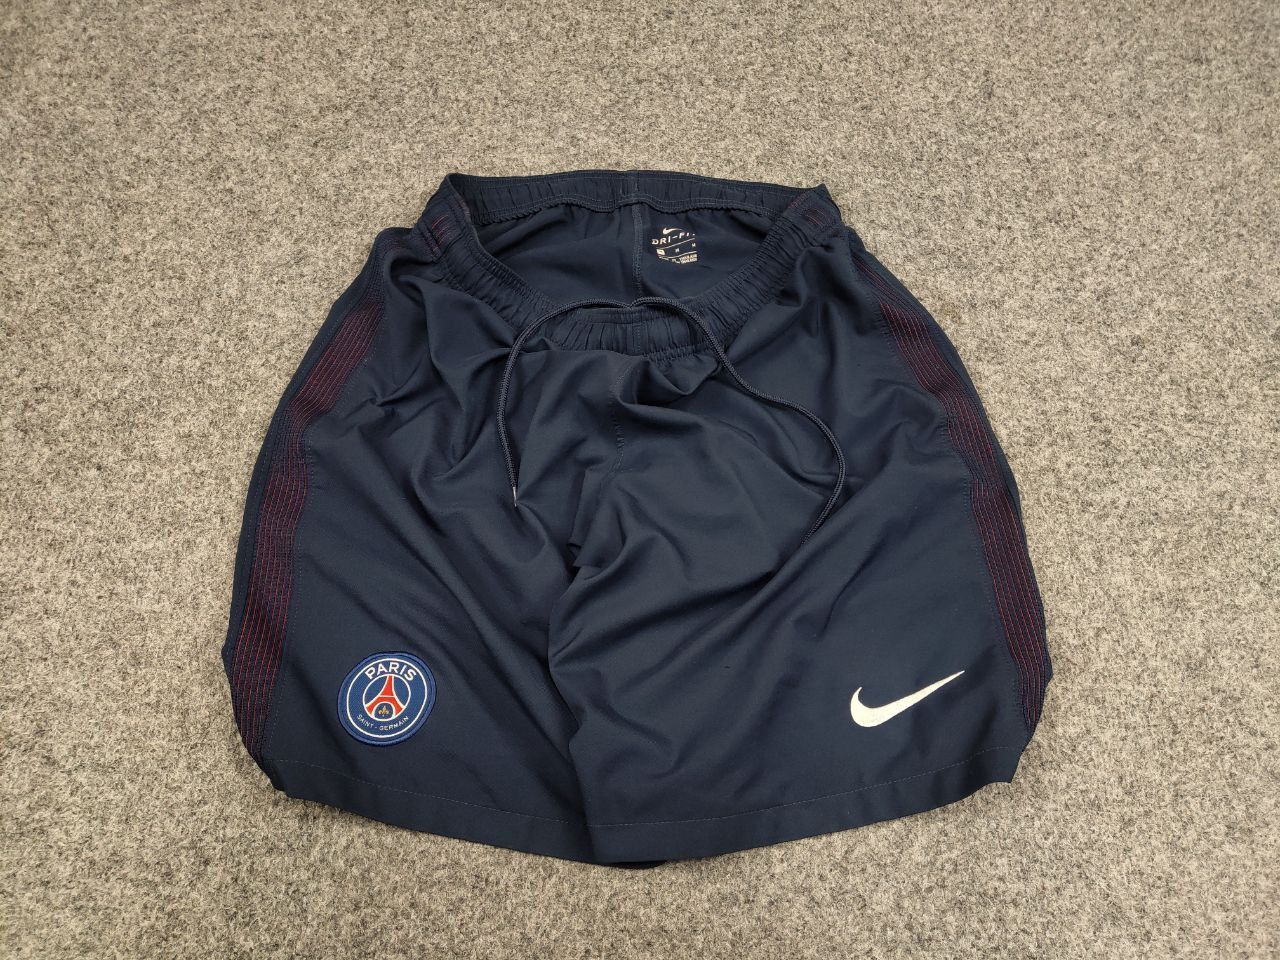 Nike Nike x Paris Saint-Germain PSG Vintage Style Blue Shorts Size US 32 / EU 48 - 2 Preview